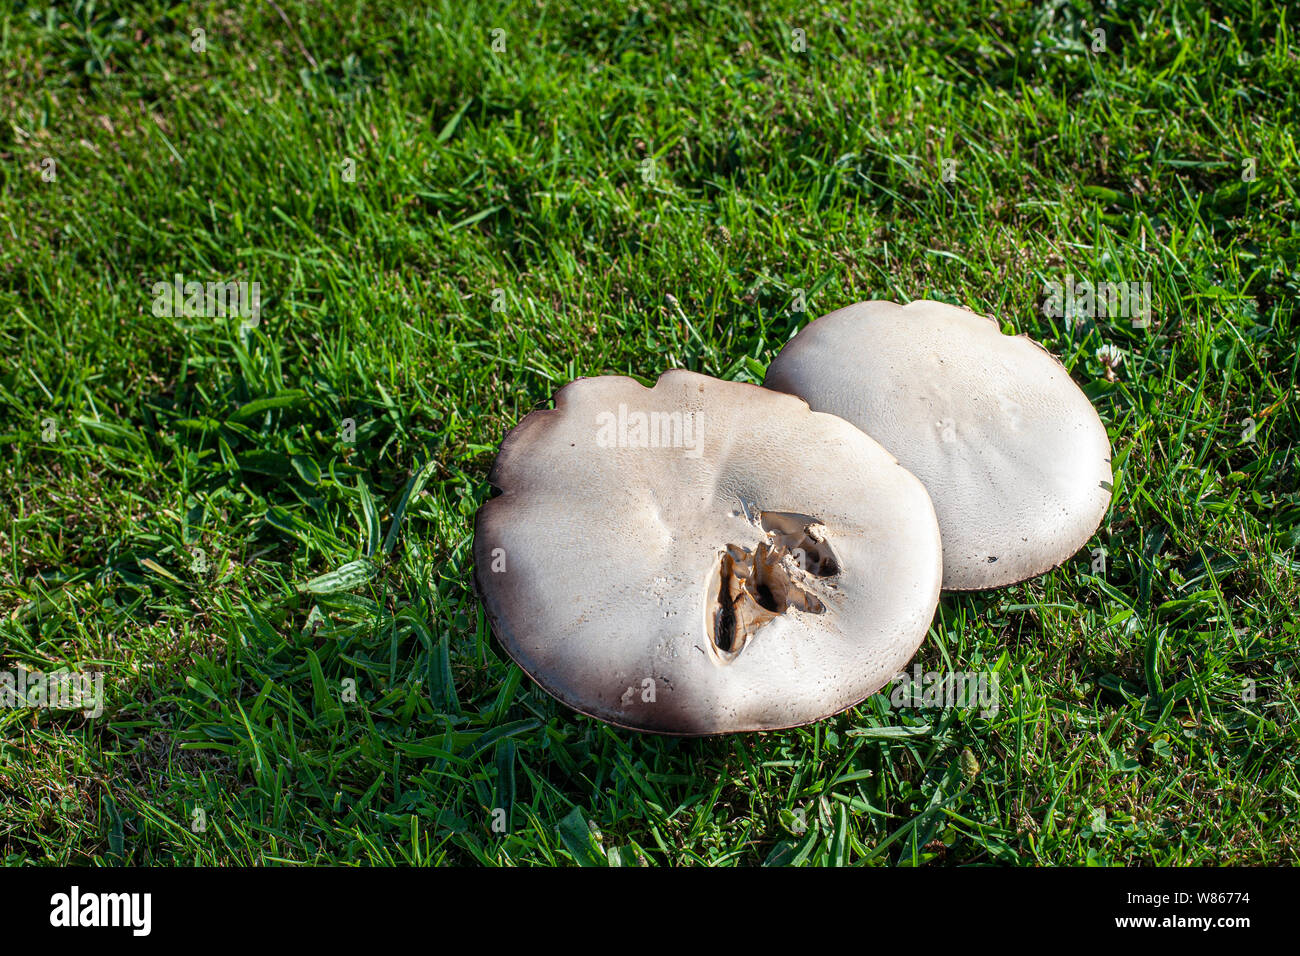 Mushrooms Growing On A Garden Lawn Stock Photo 263210168 Alamy